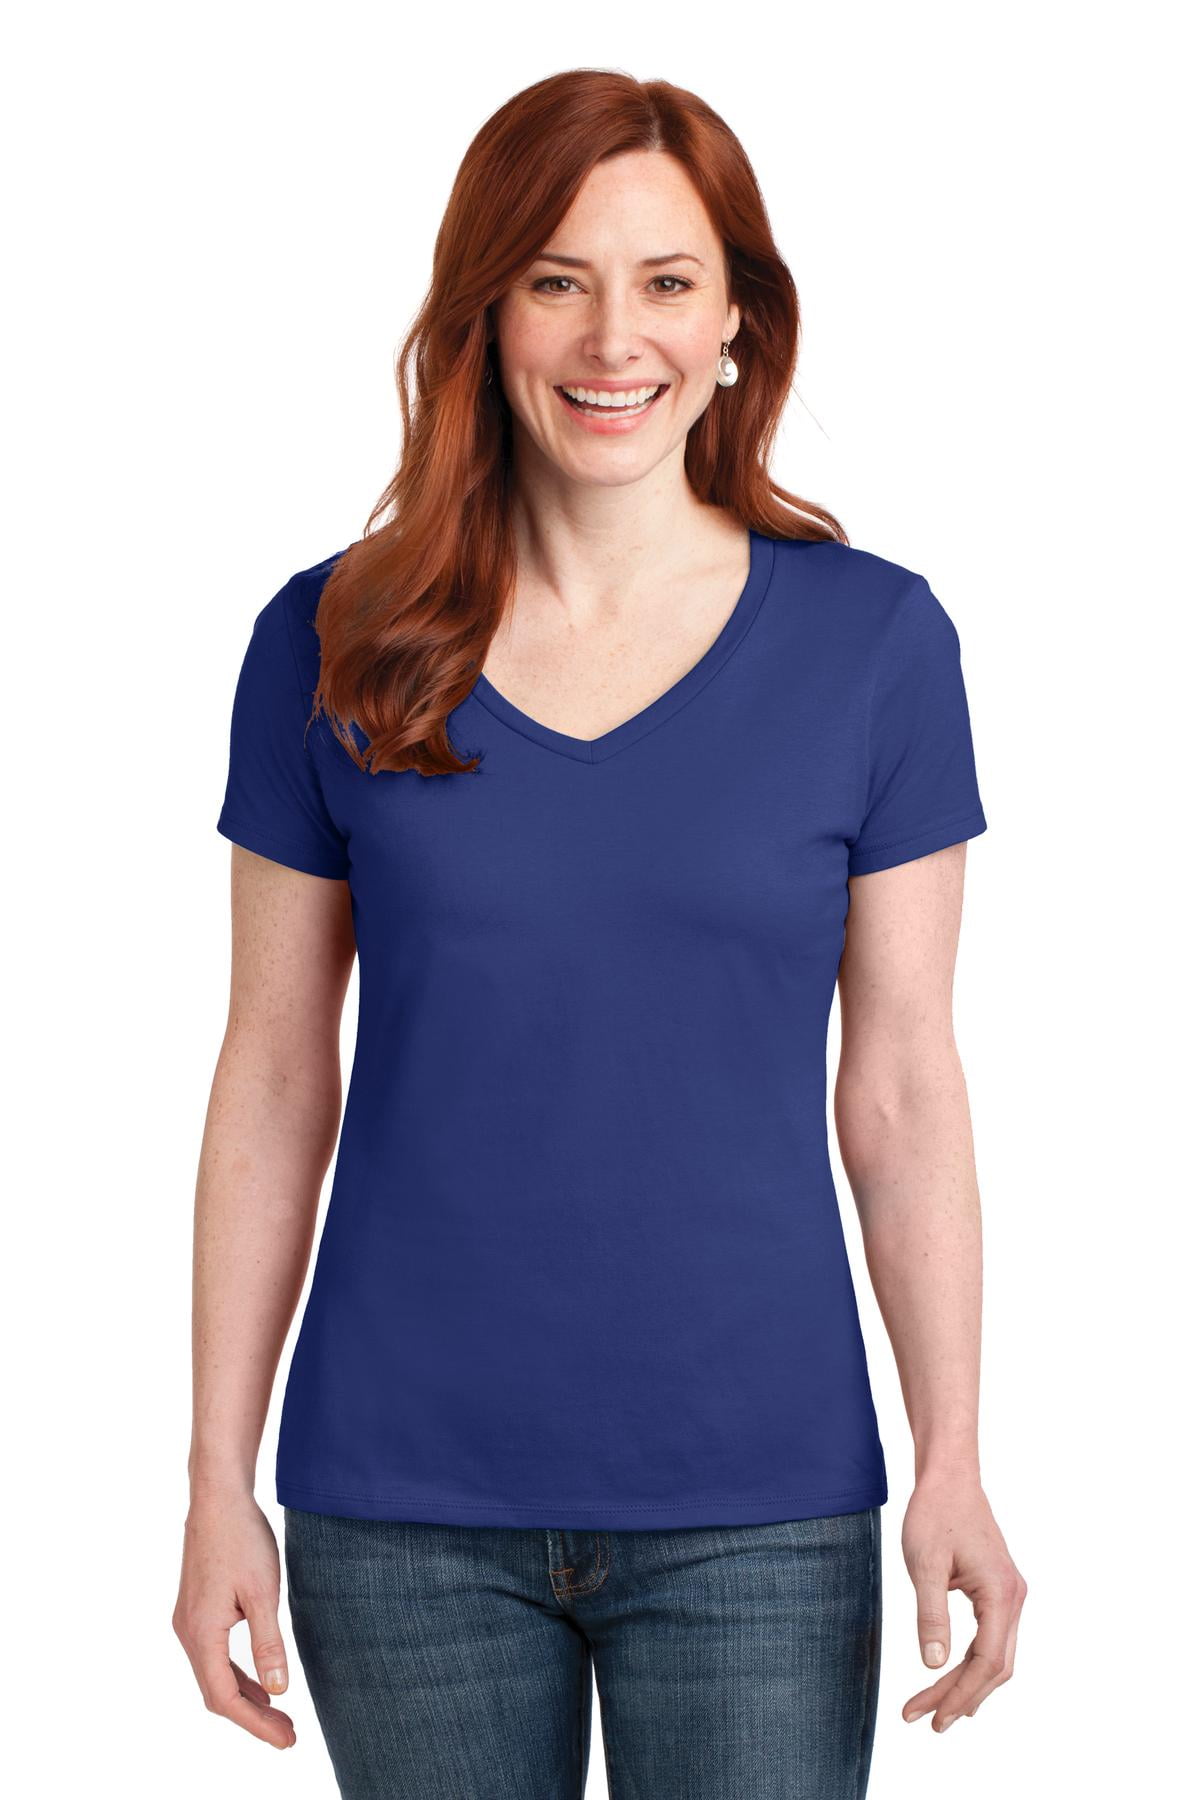 Hanes - Hanes Ladies Nano-T Cotton V-Neck T-Shirt - Walmart.com ...